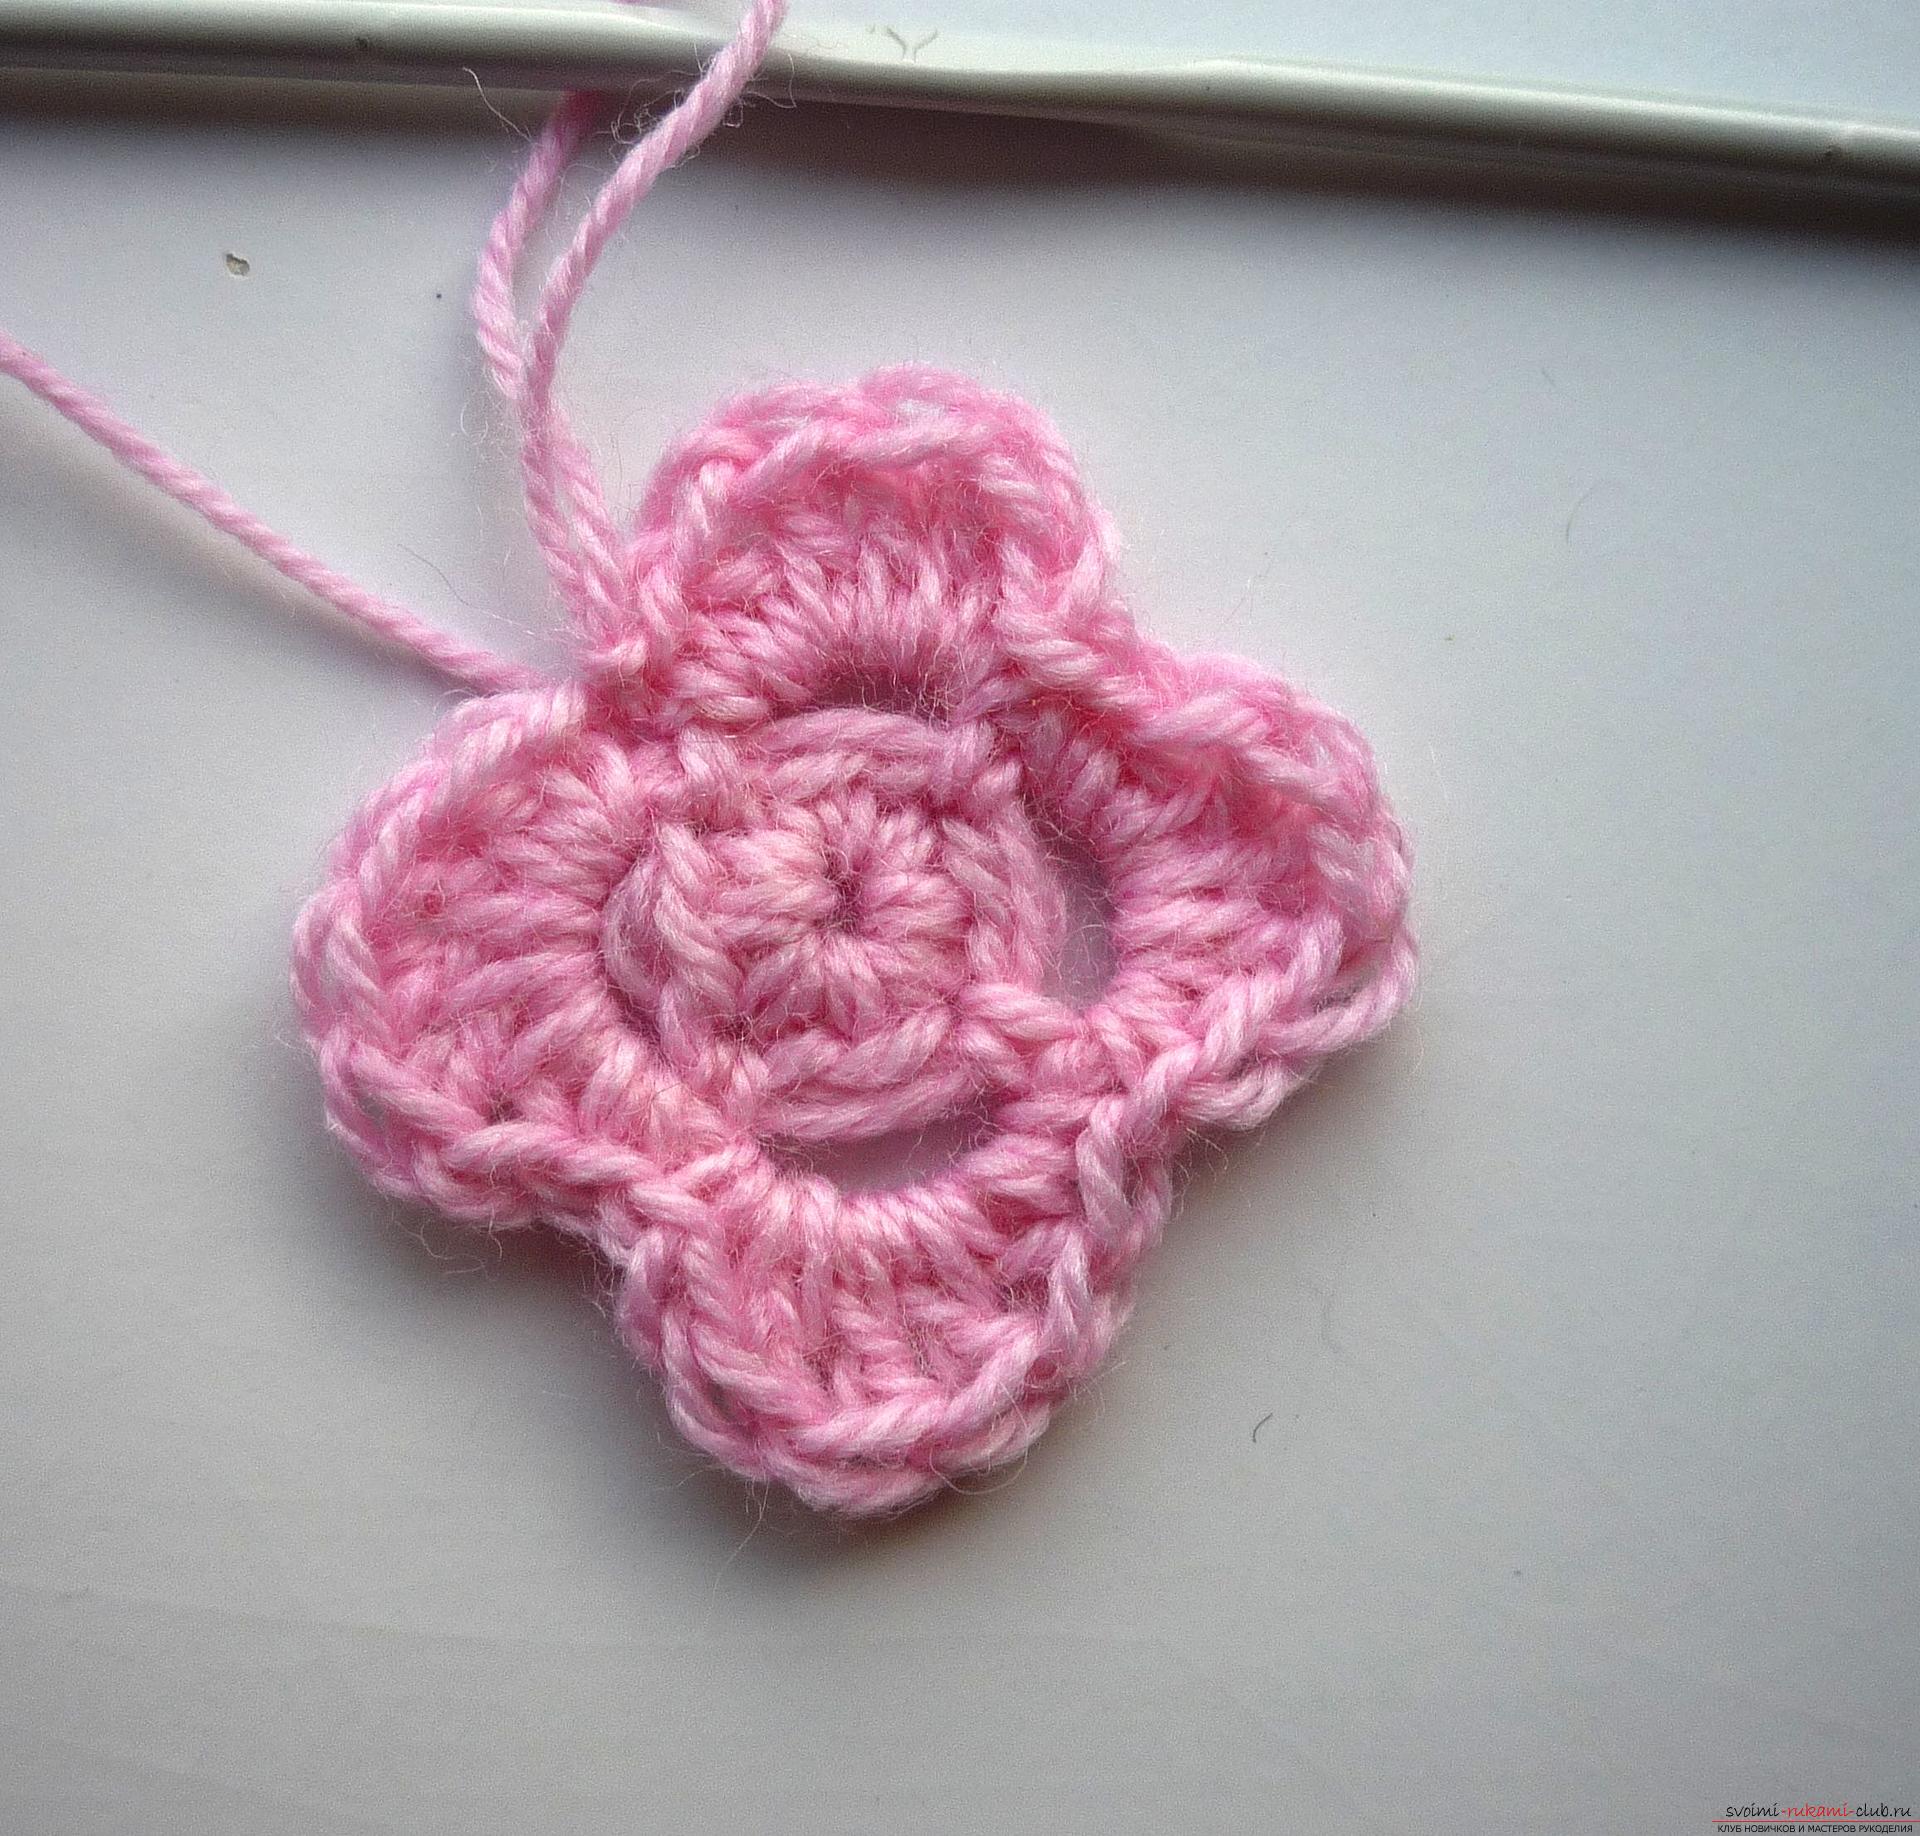 This crochet masterclass contains a crochet color scheme for a plaid .. Photo # 5